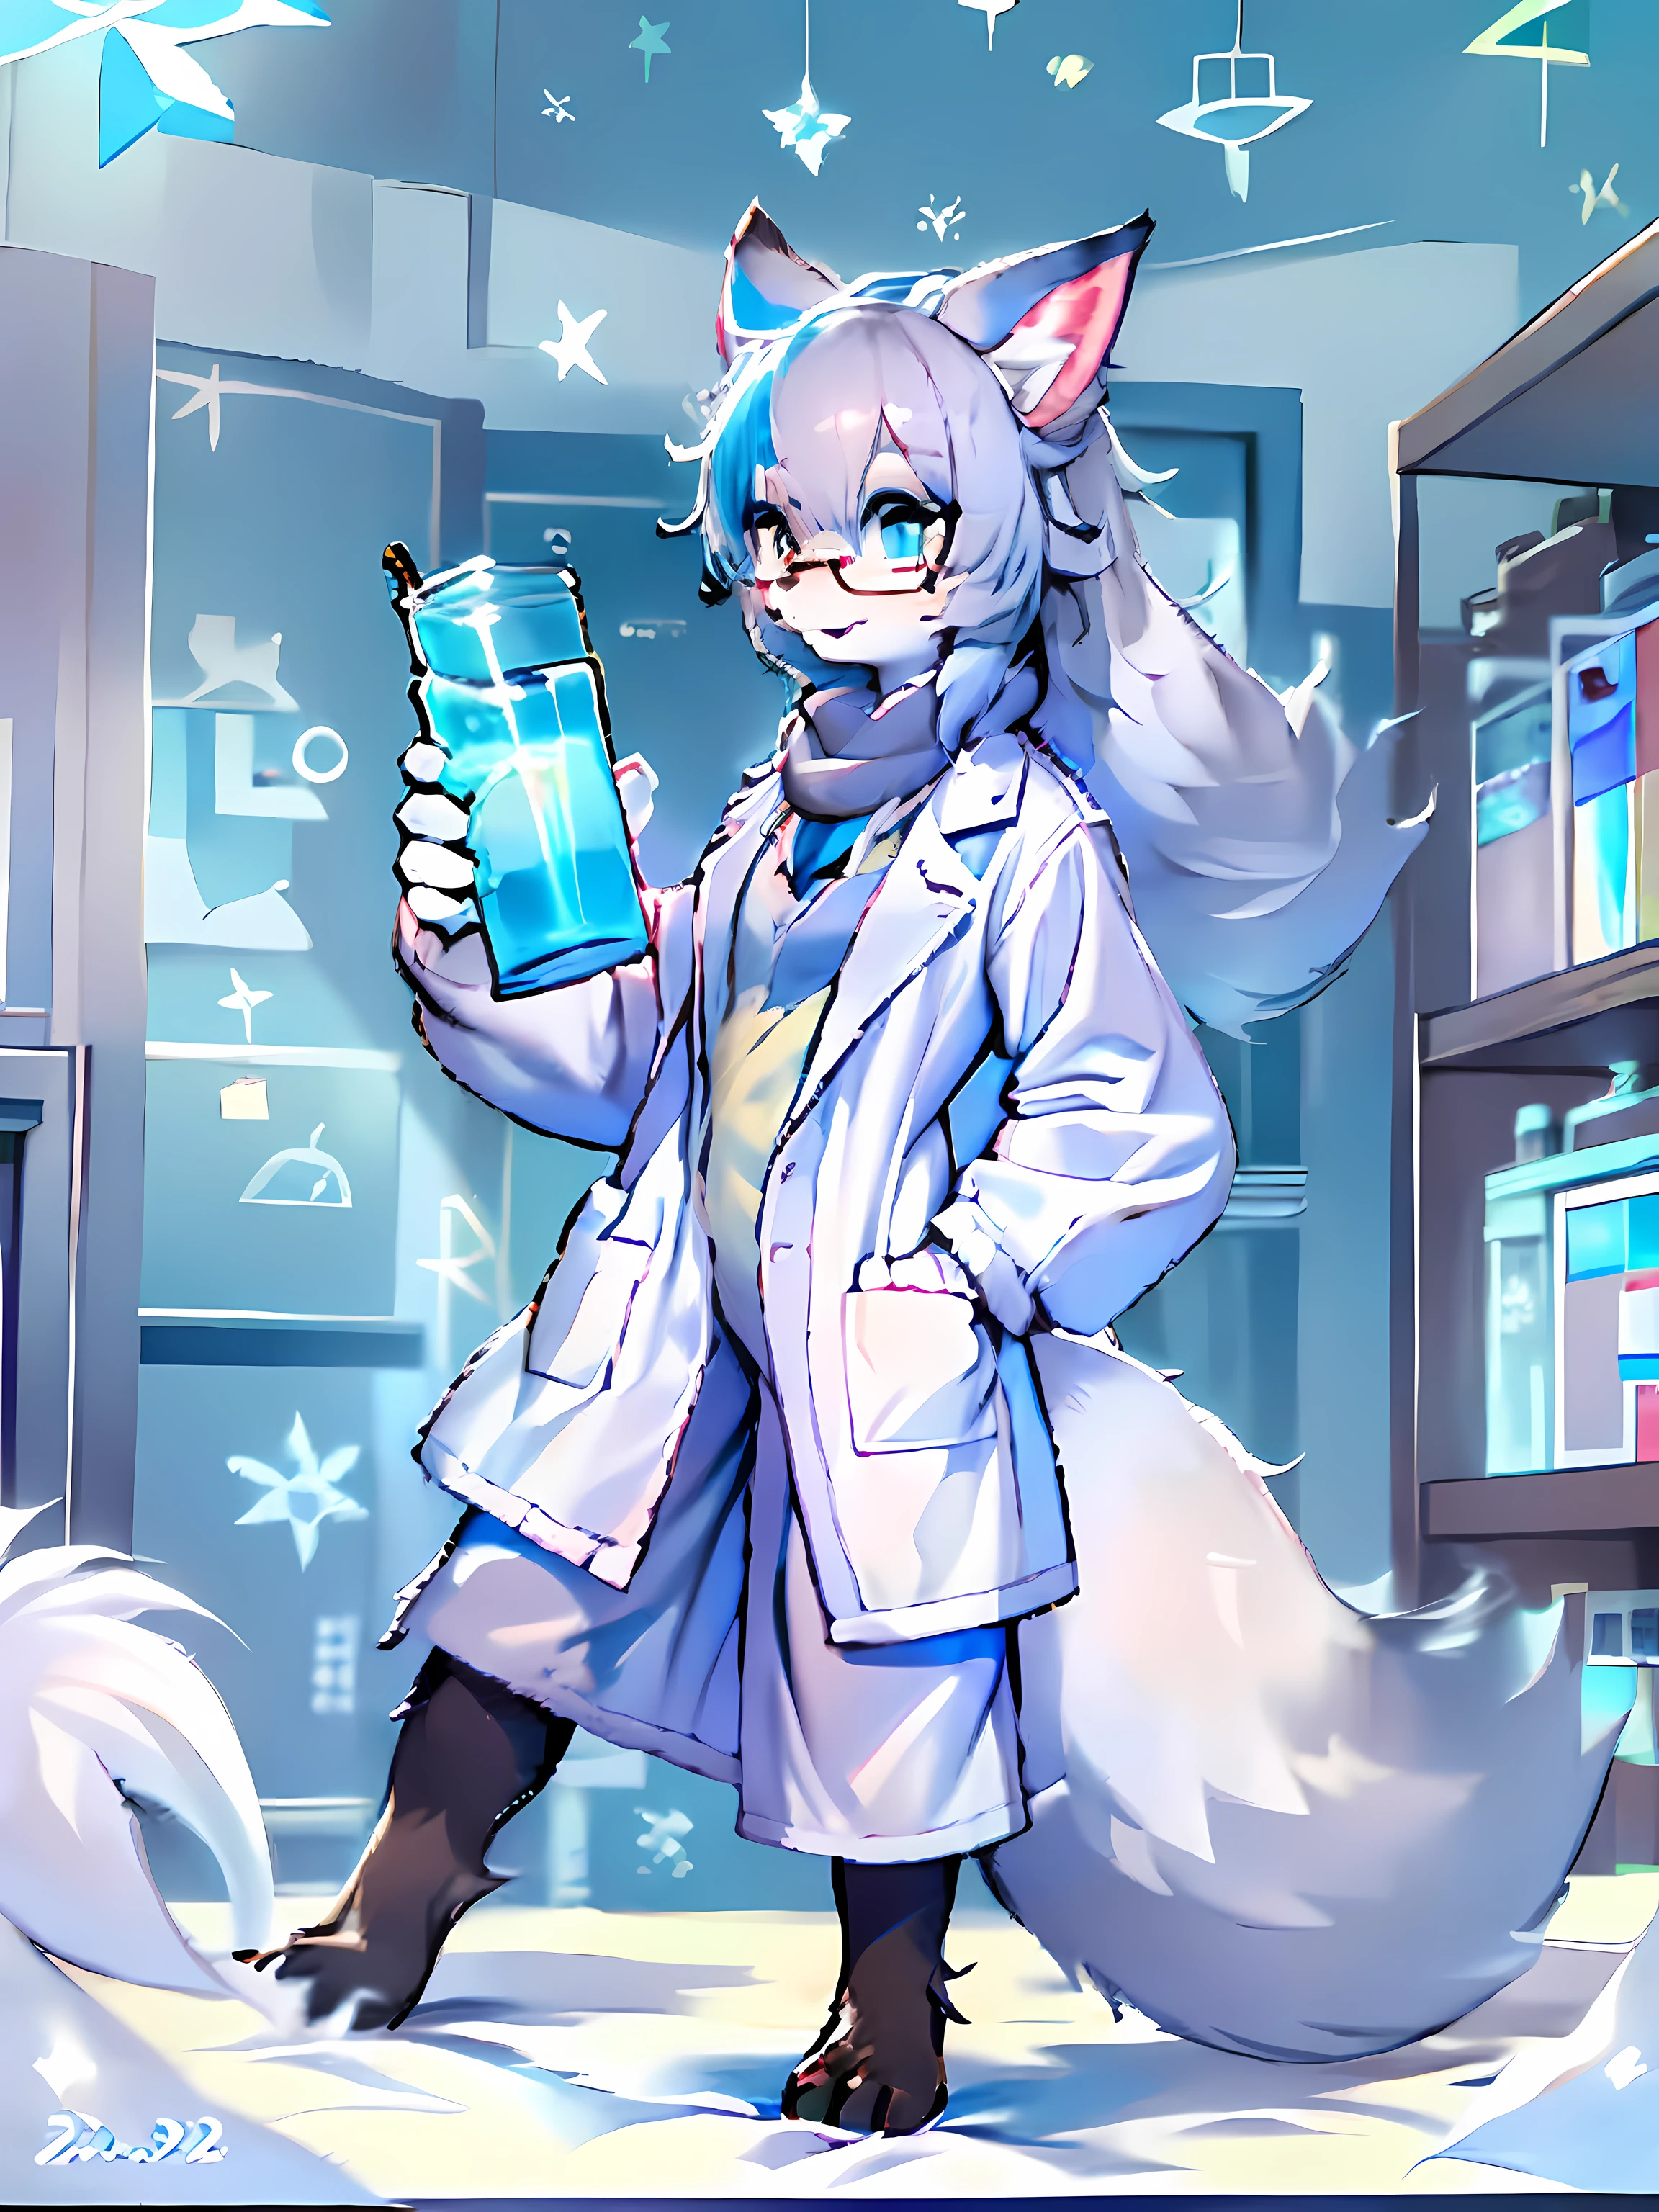 Anime character with 북극 여우 ears wearing lab coat and blue scarf,북극 여우，푹신한 파란색 모피와 파란색 꼬리,반테 안경을 착용하세요,실험복을 입은 북극 여우의 아름다움,  여우 과학자，실험실 내부, 전문적인 모피 드로잉